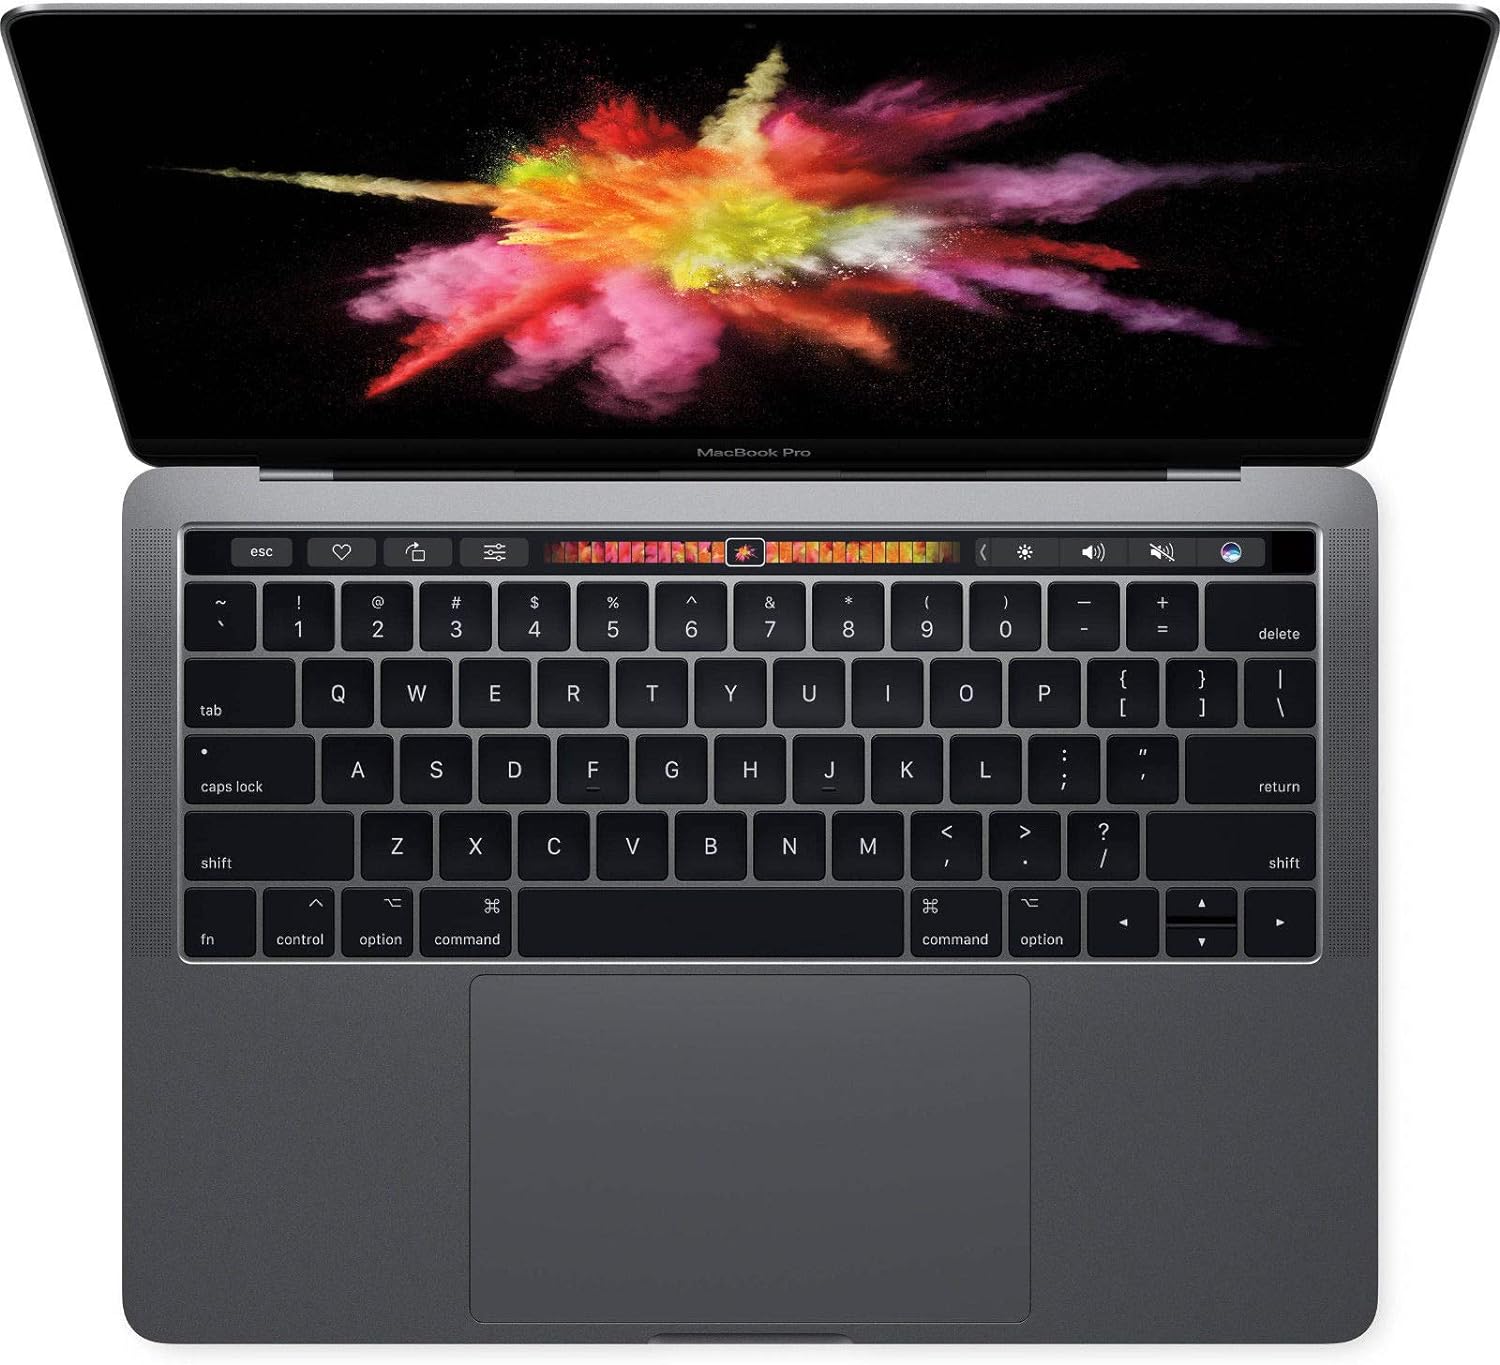 Apple 13in MacBook Pro, Retina, Touch Bar, 3.1GHz Intel Core i5 Dual Core, 8GB RAM, 256GB SSD, Space Gray, MPXV2LL/A (Renewed)